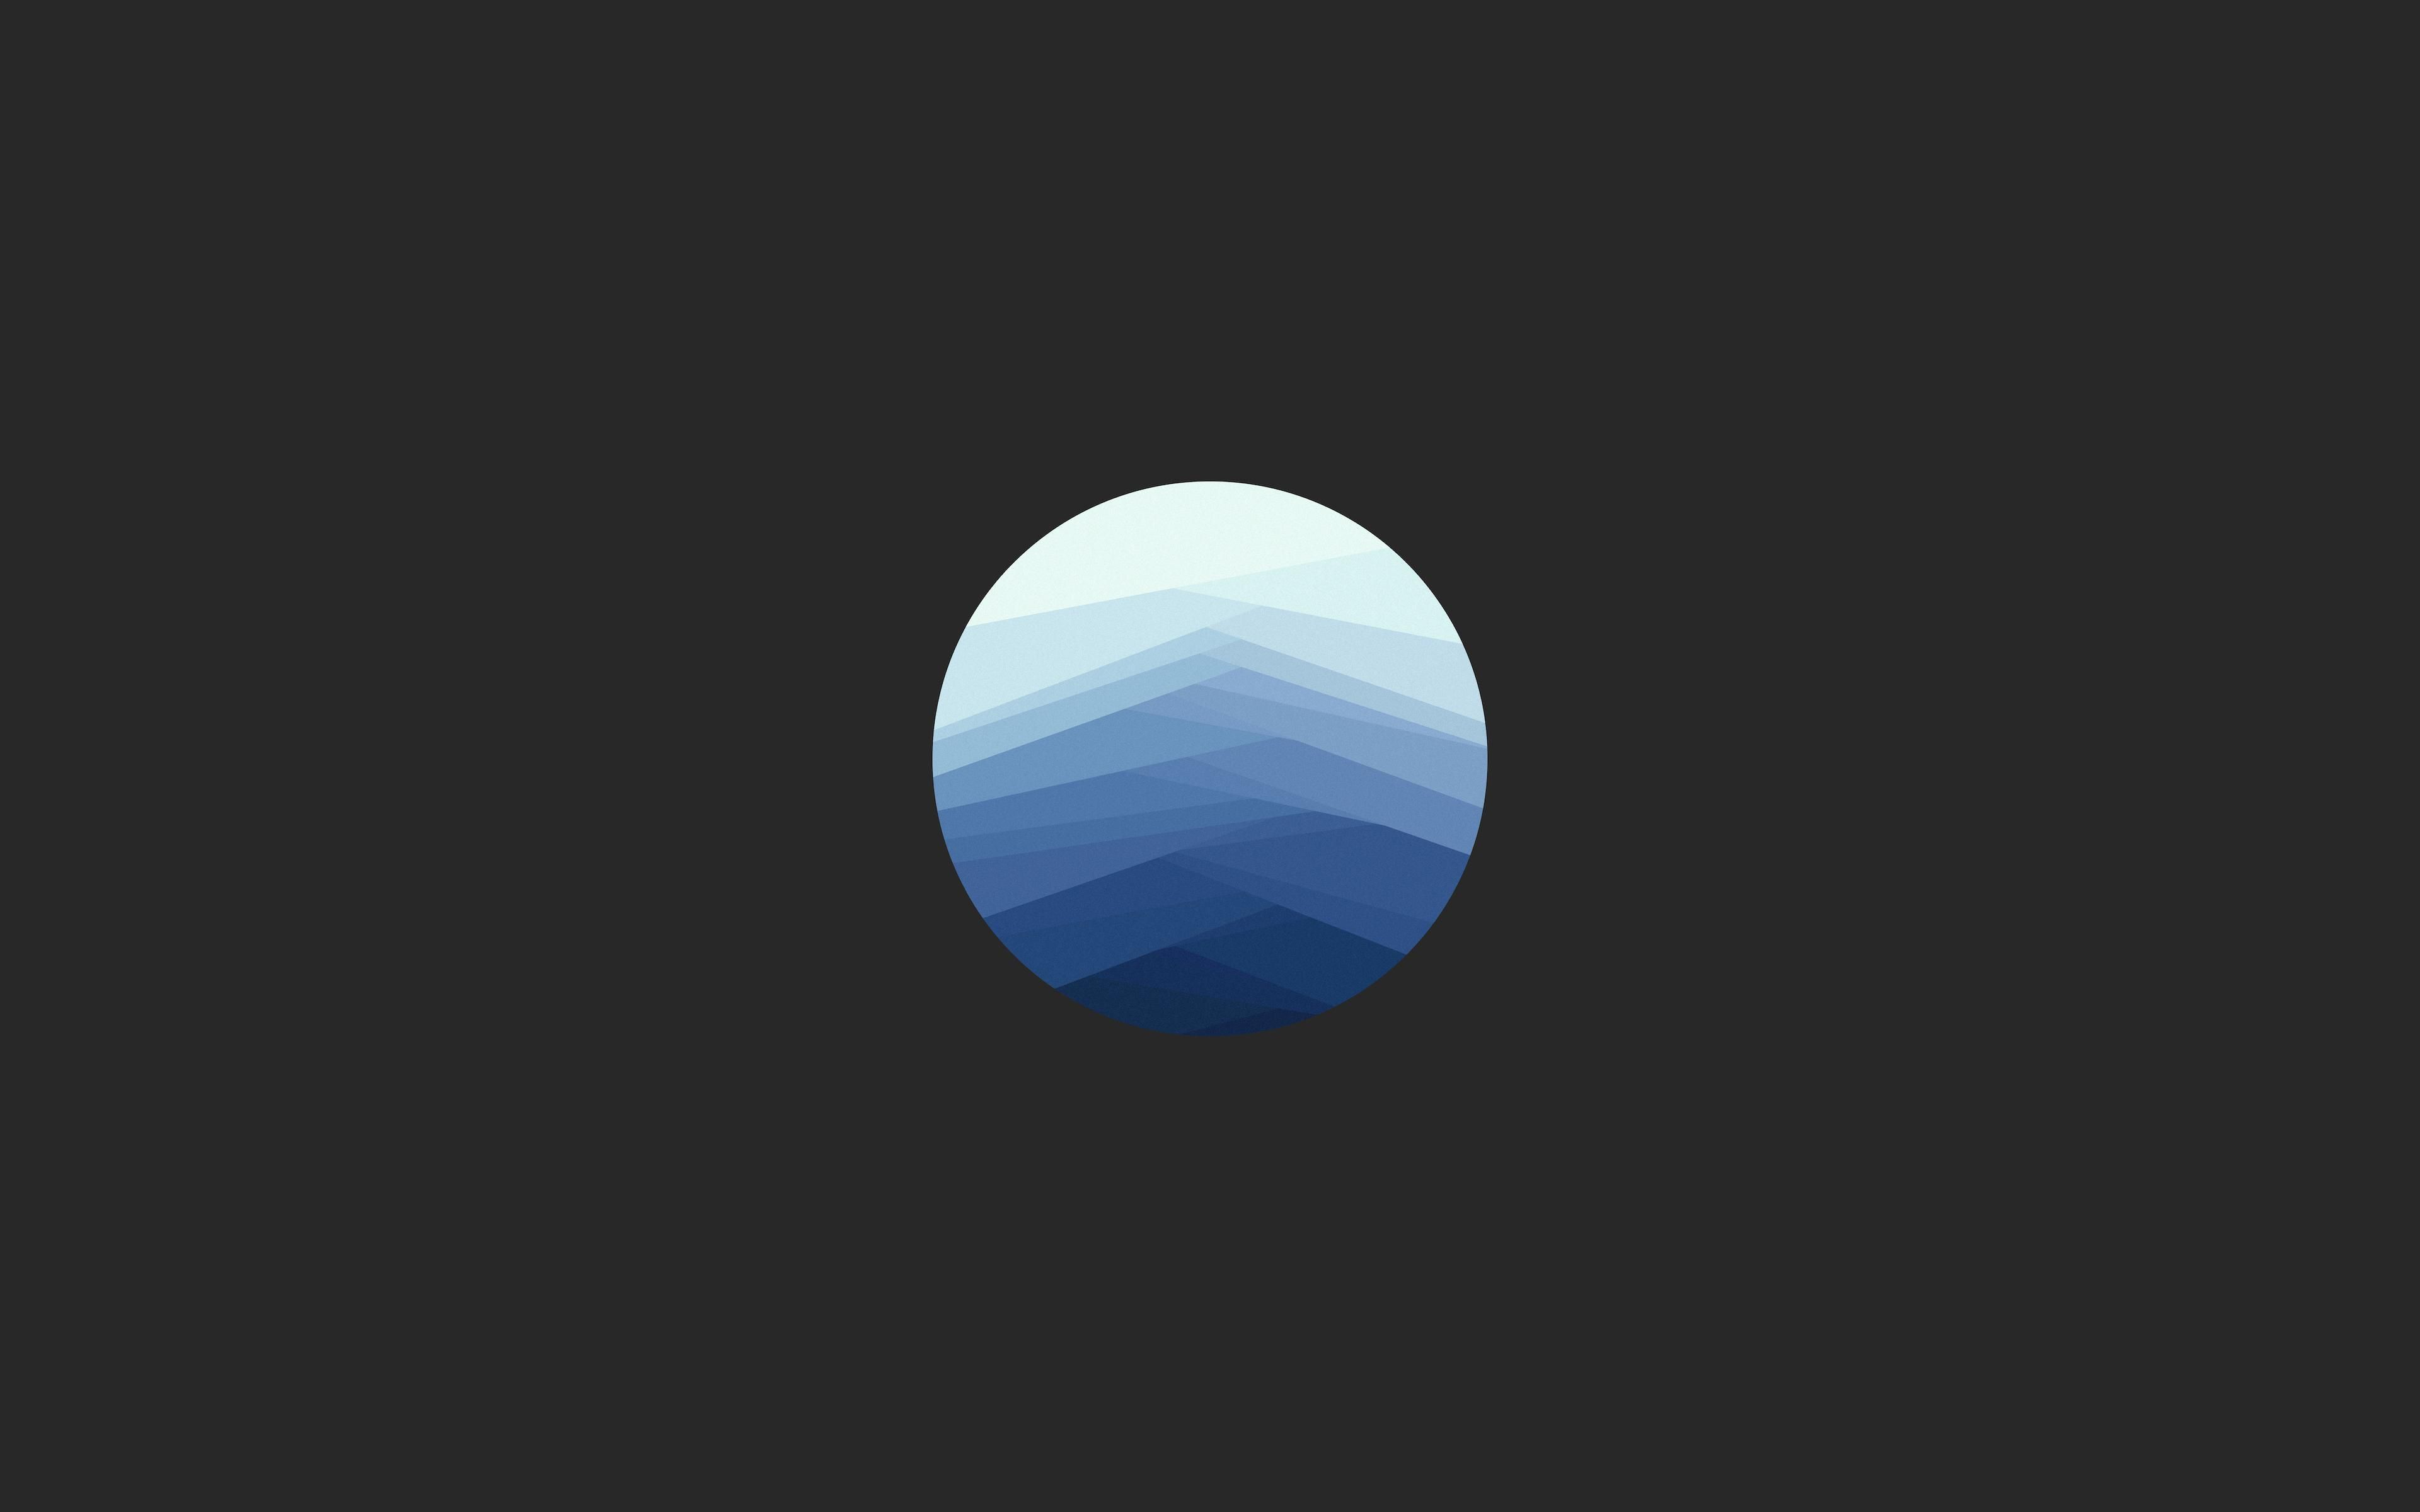 Minimalistic Blue Sphere. Minimalist wallpaper, Desktop wallpaper background, Computer wallpaper desktop wallpaper